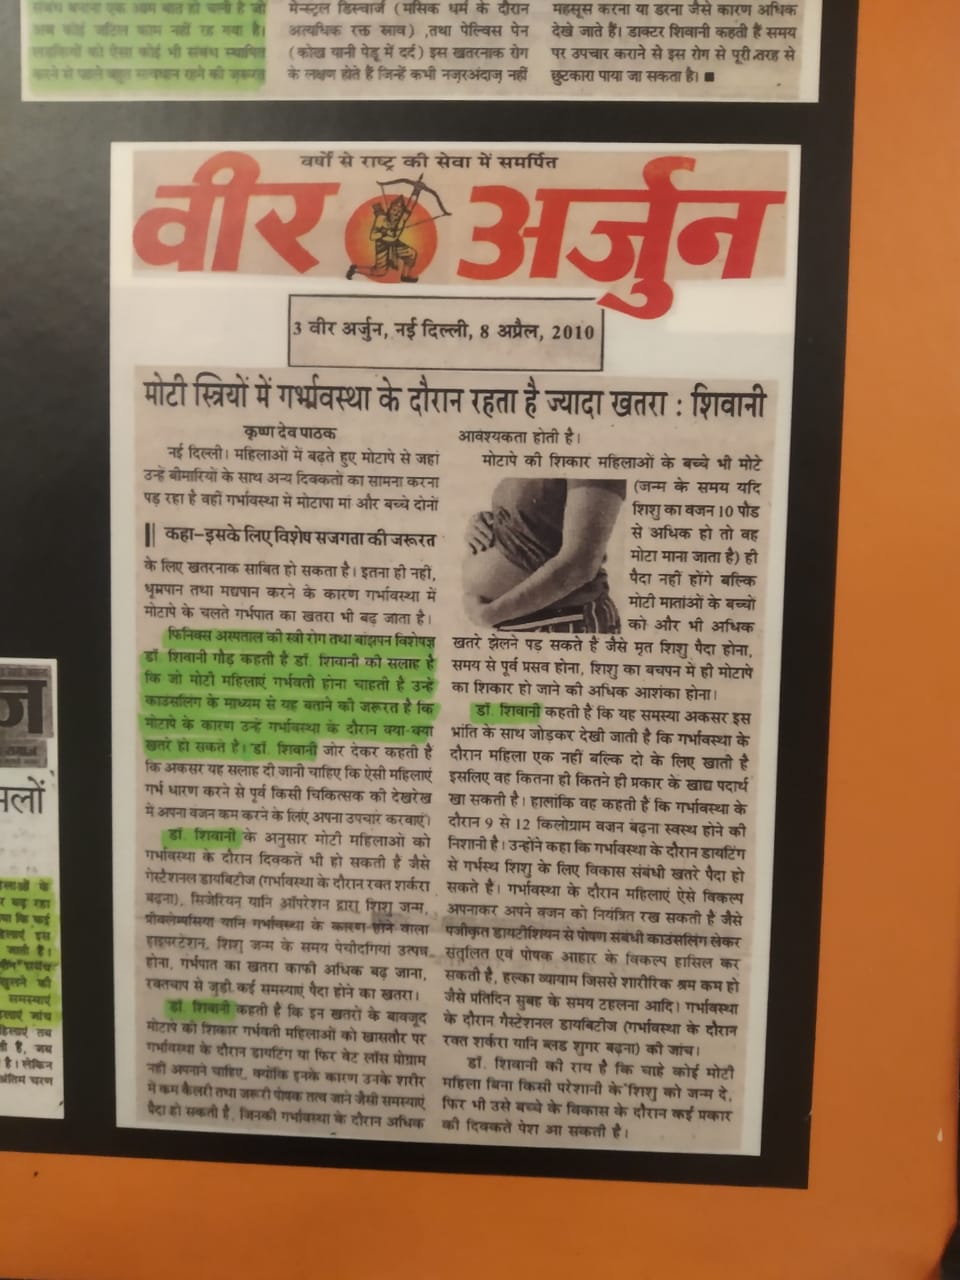 Dr Shivani Sachdev Gour News in Veer Arjun News Paper New Delhi